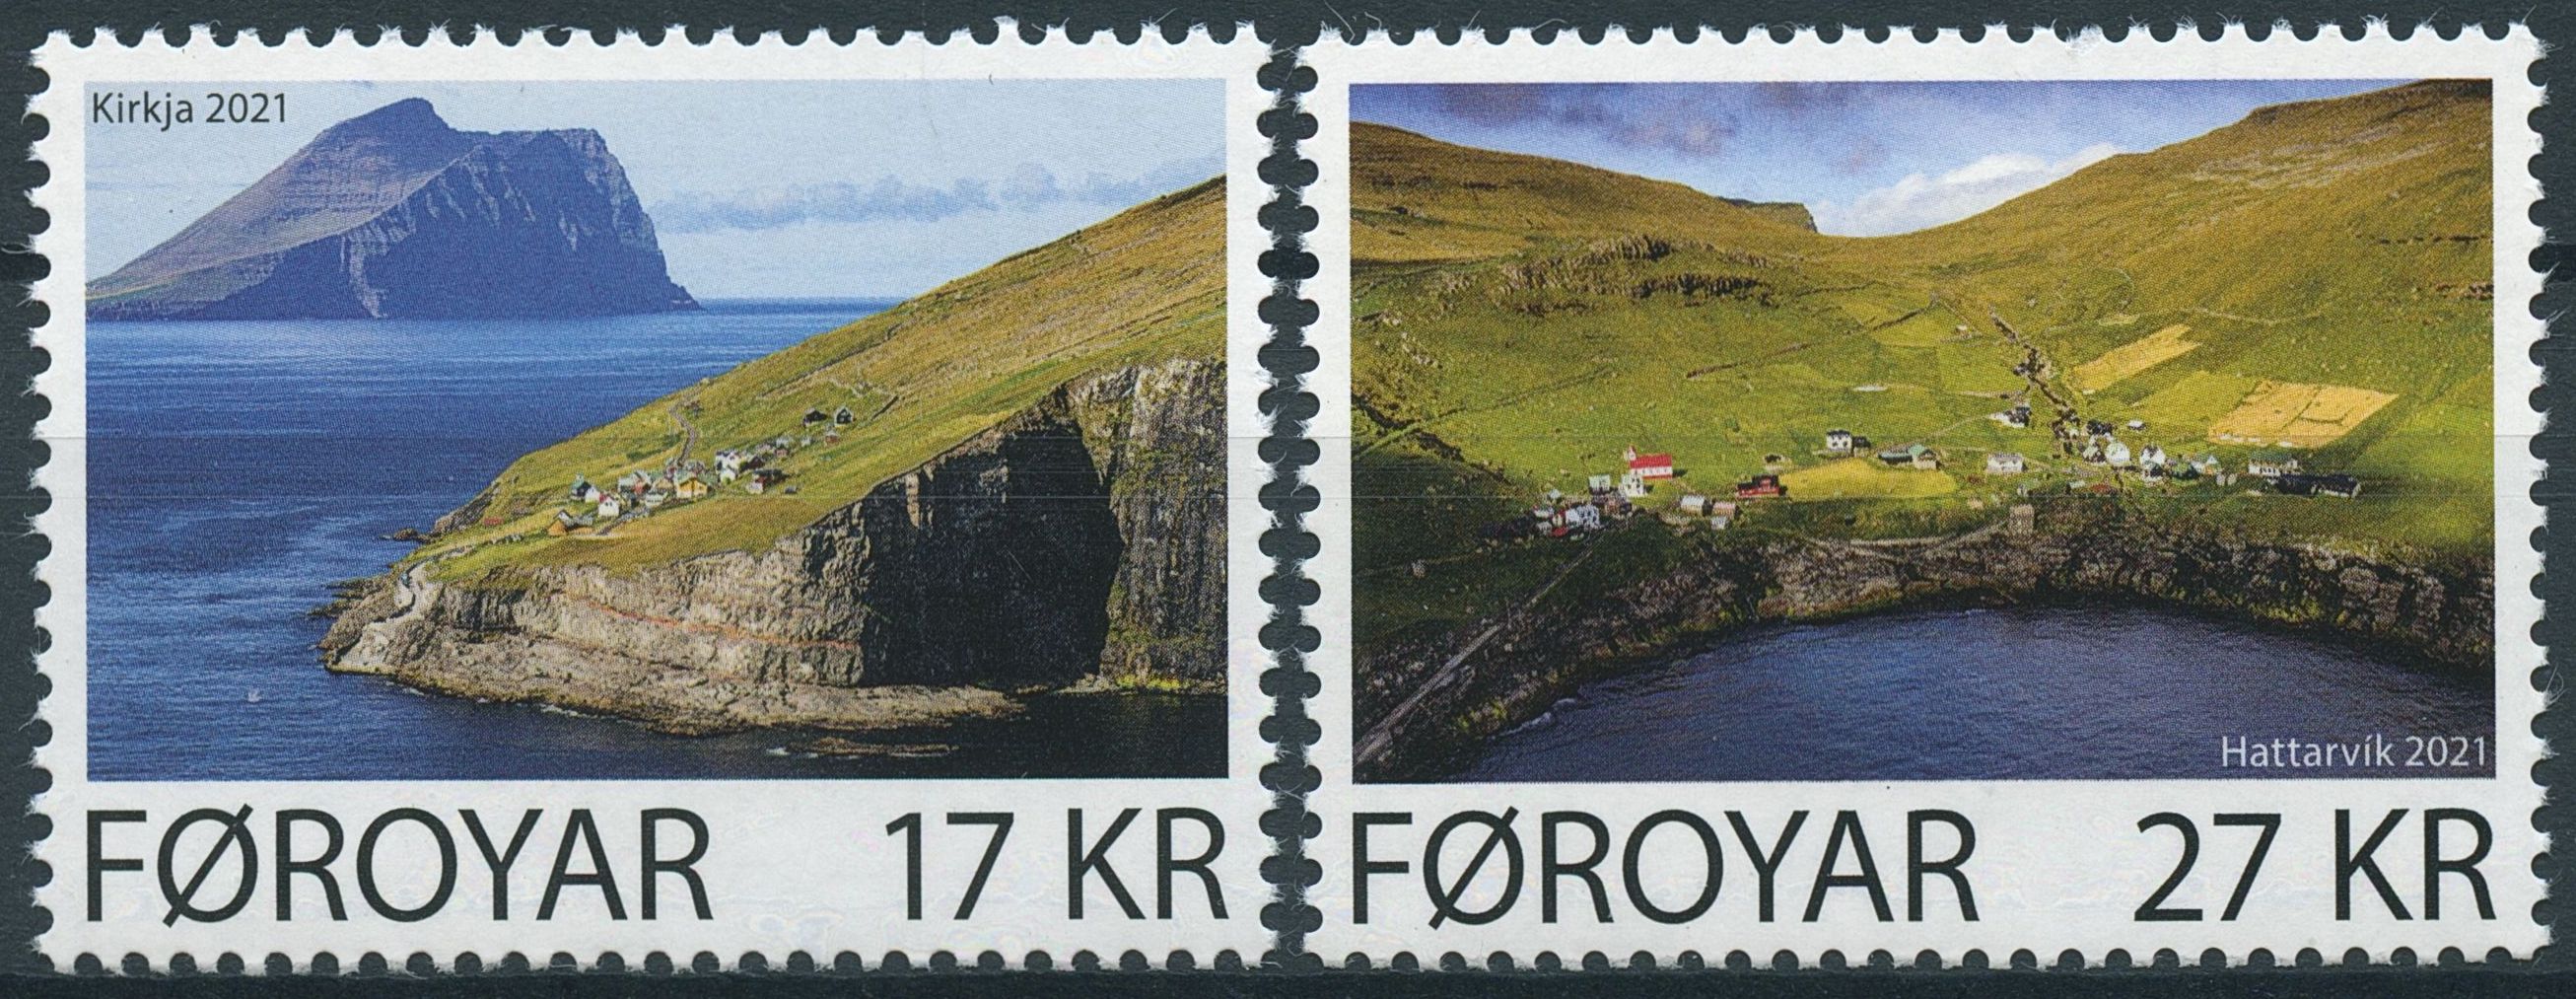 Faroes Faroe Islands Landscapes Stamps 2021 MNH Kirkja & Hattarvik 2v Set